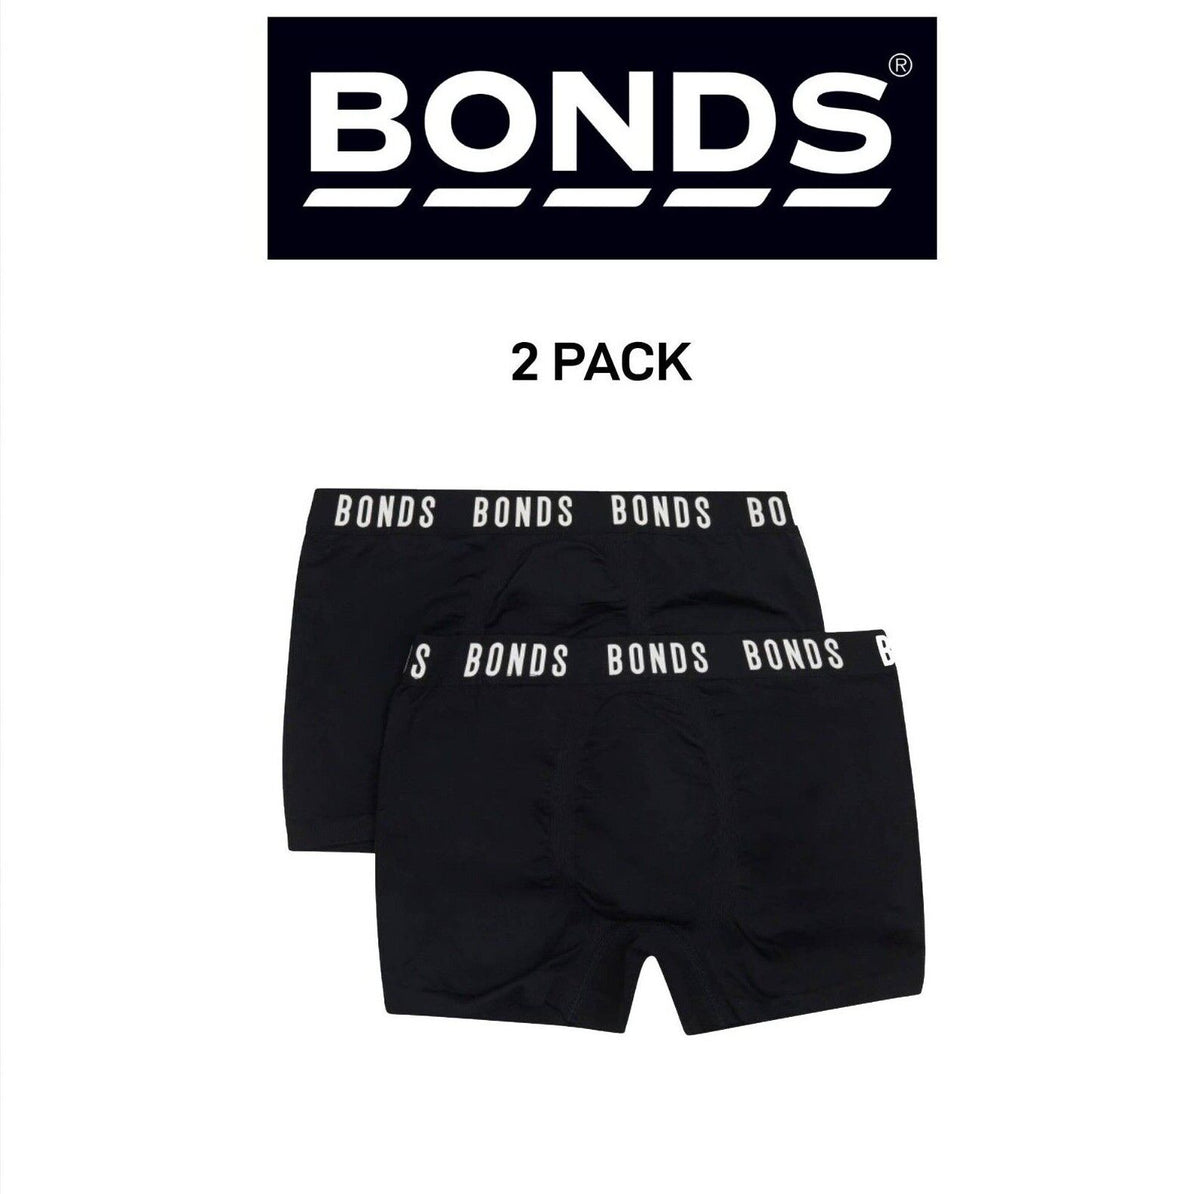 Bonds Boys Super Stretchies Trunk Extra Stretchy Comfy Undies 2 Pack UXXK2A